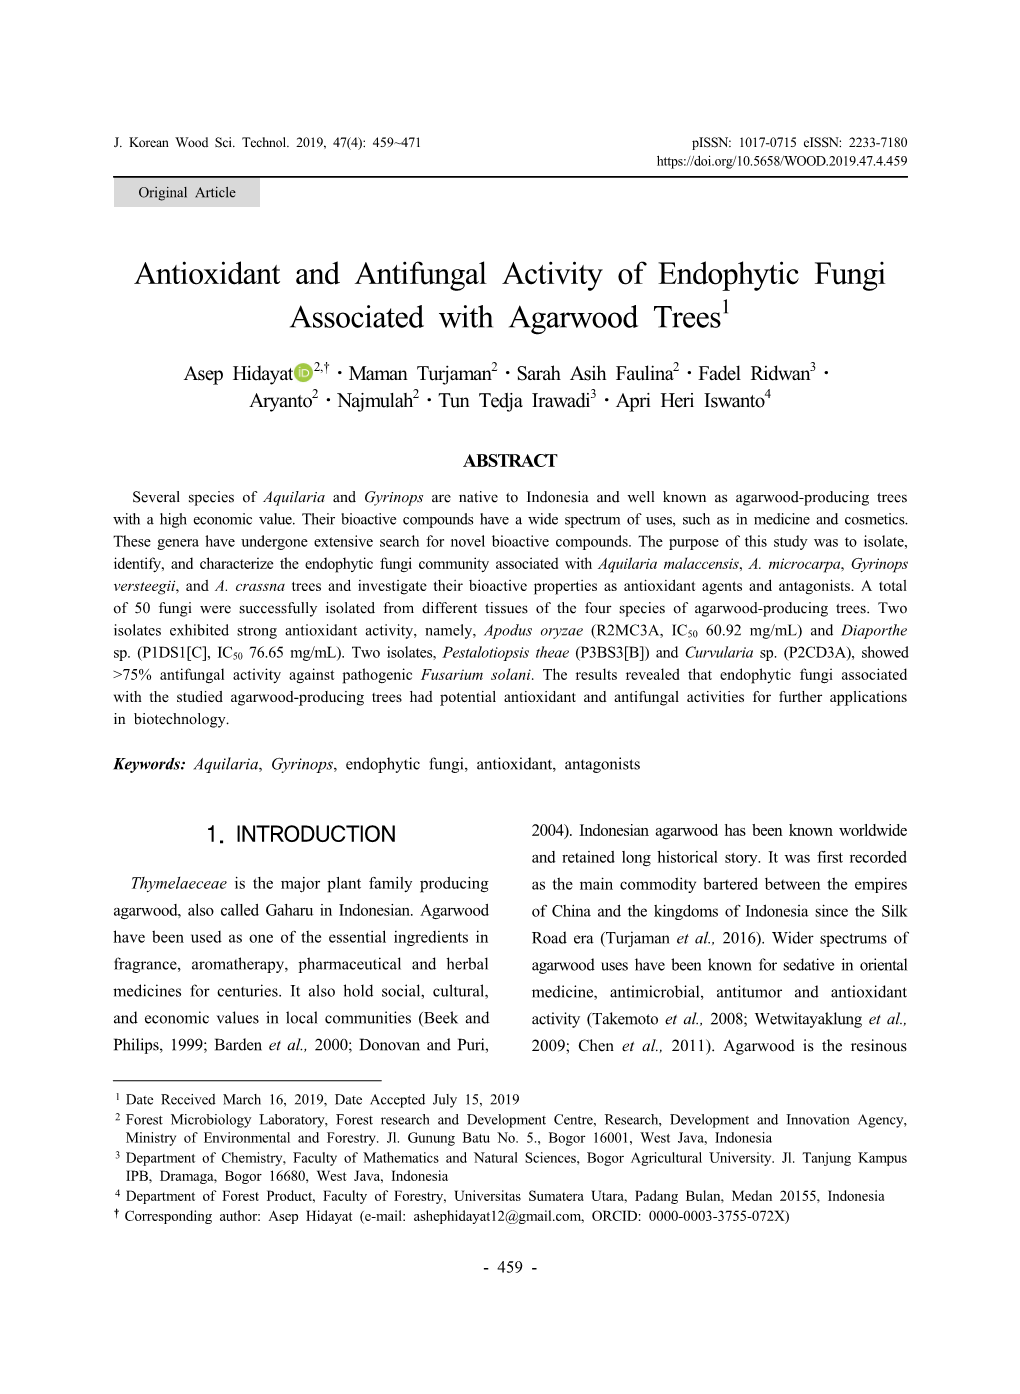 Antioxidant and Antifungal Activity of Endophytic Fungi Associated with Agarwood Trees1